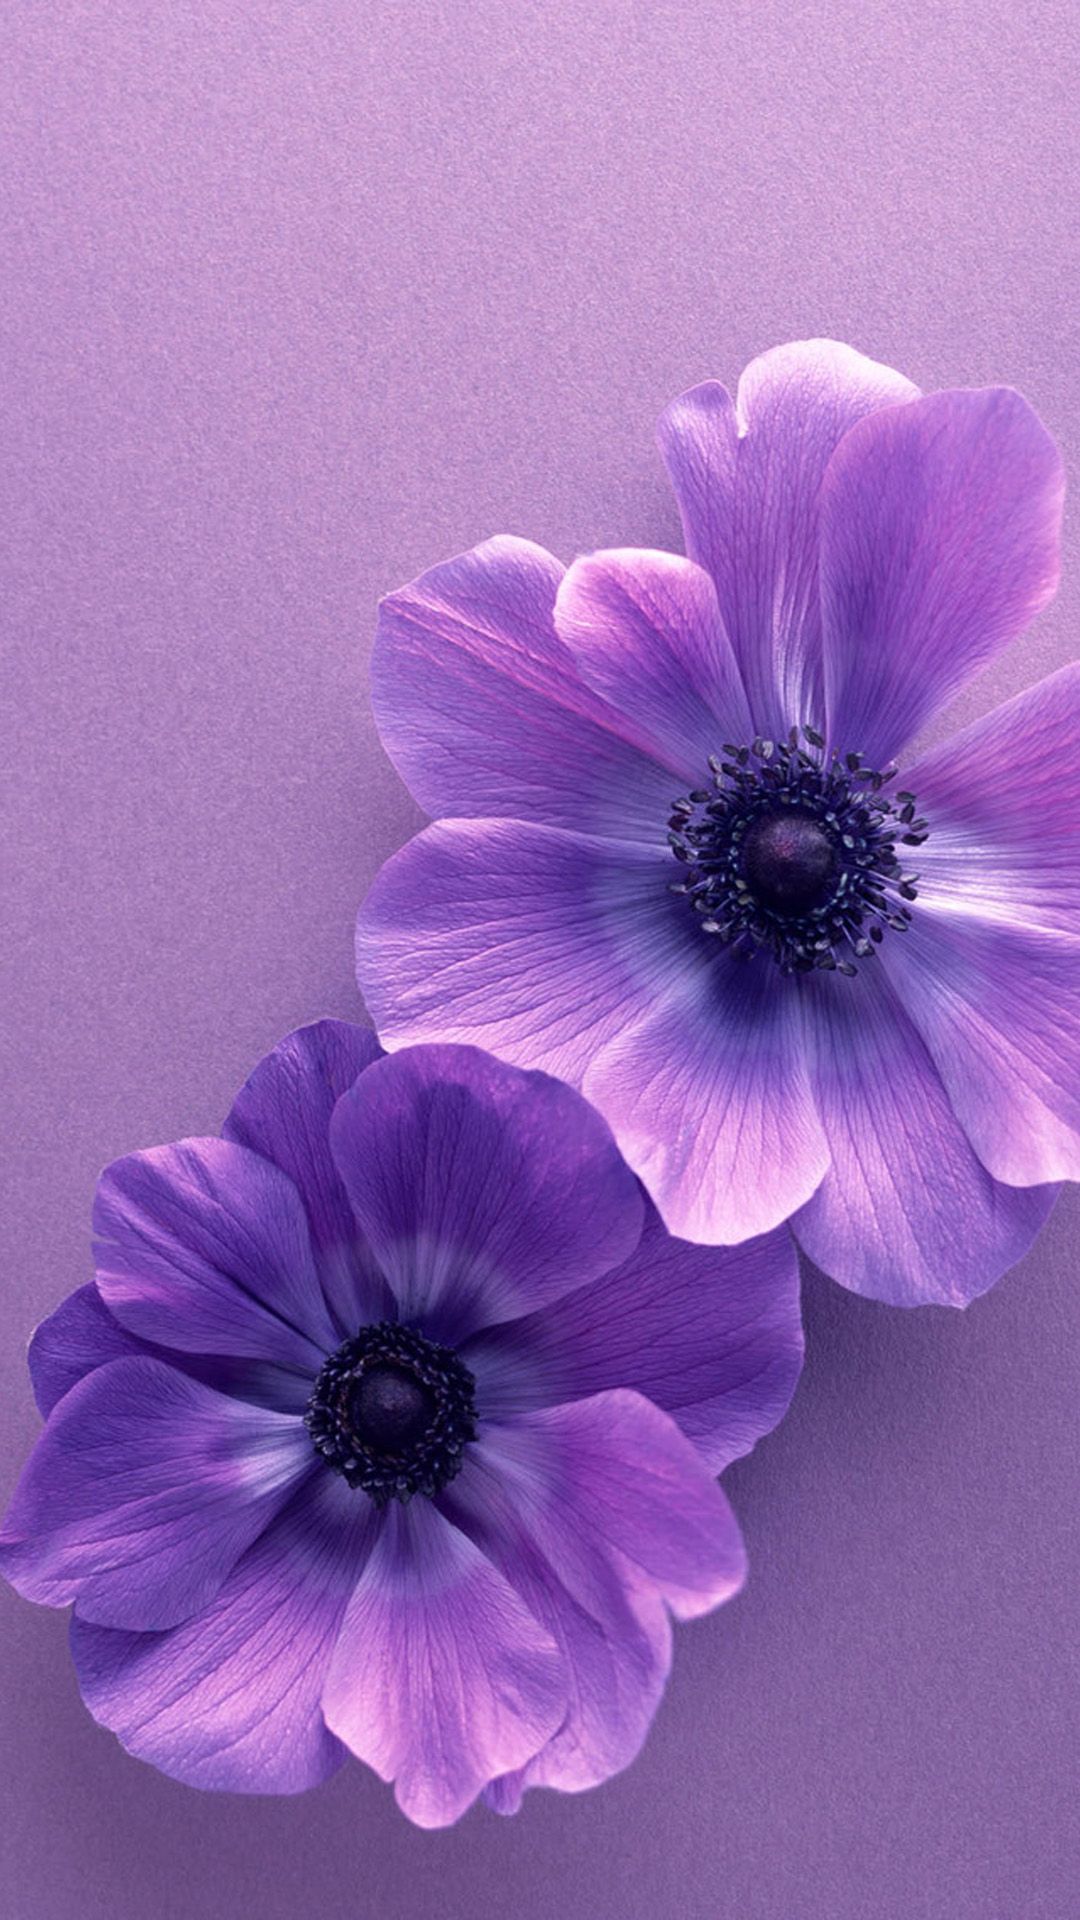 Flower Samsung Galaxy S5 Wallpaper 152. Purple flowers wallpaper, Purple wallpaper phone, Flower iphone wallpaper